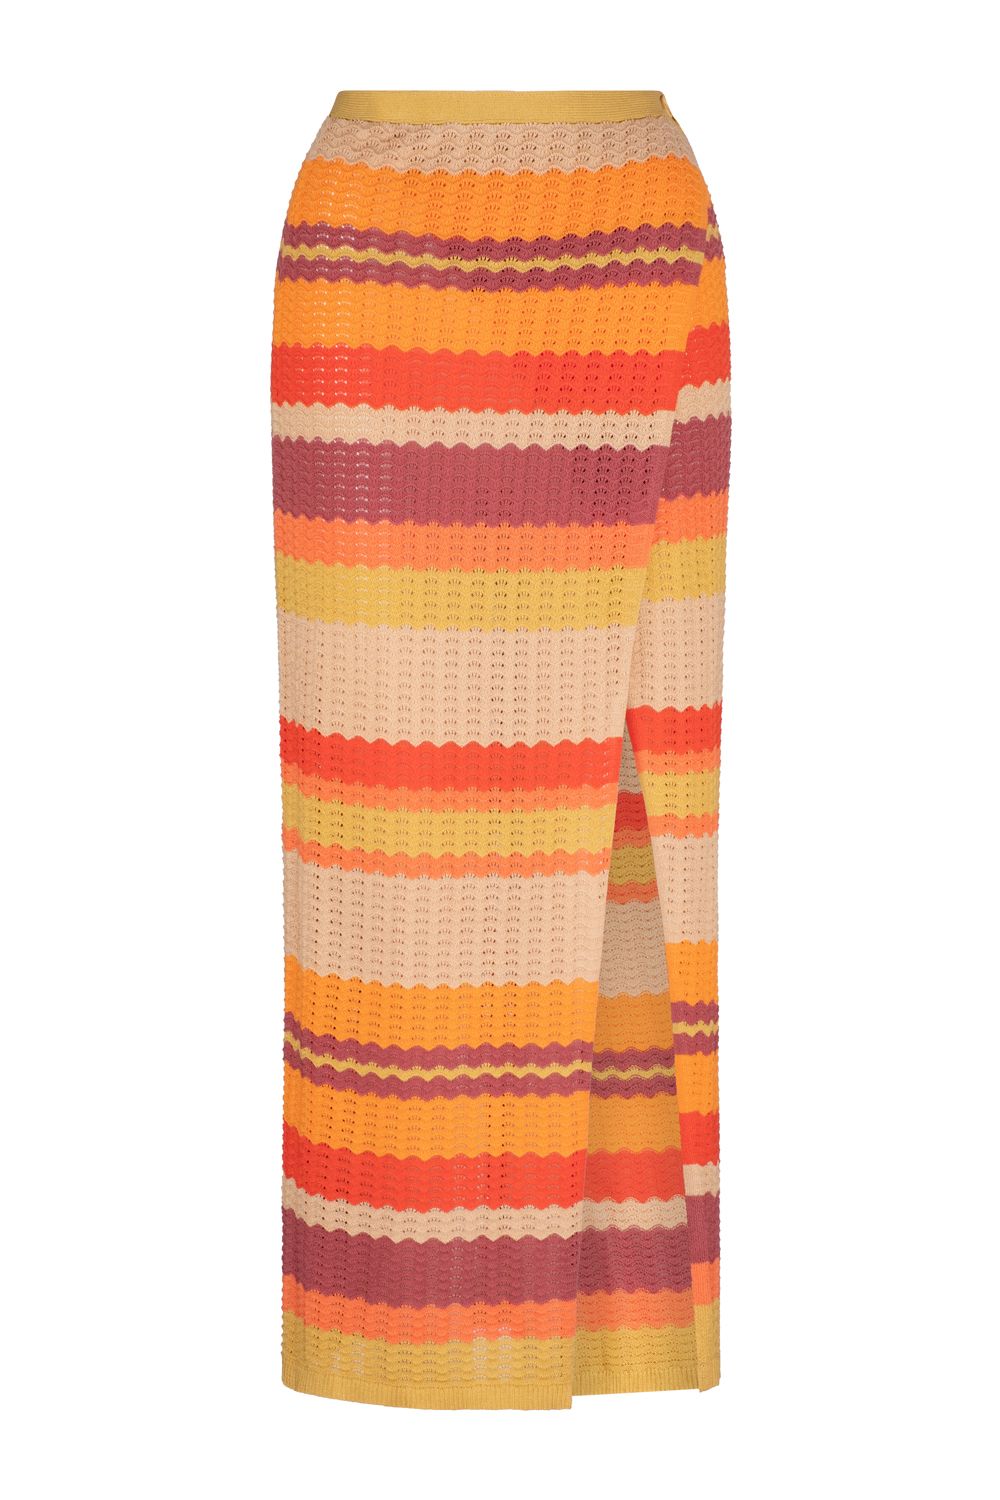 Leilani Mila Midi Skirt - Sunset Stripe